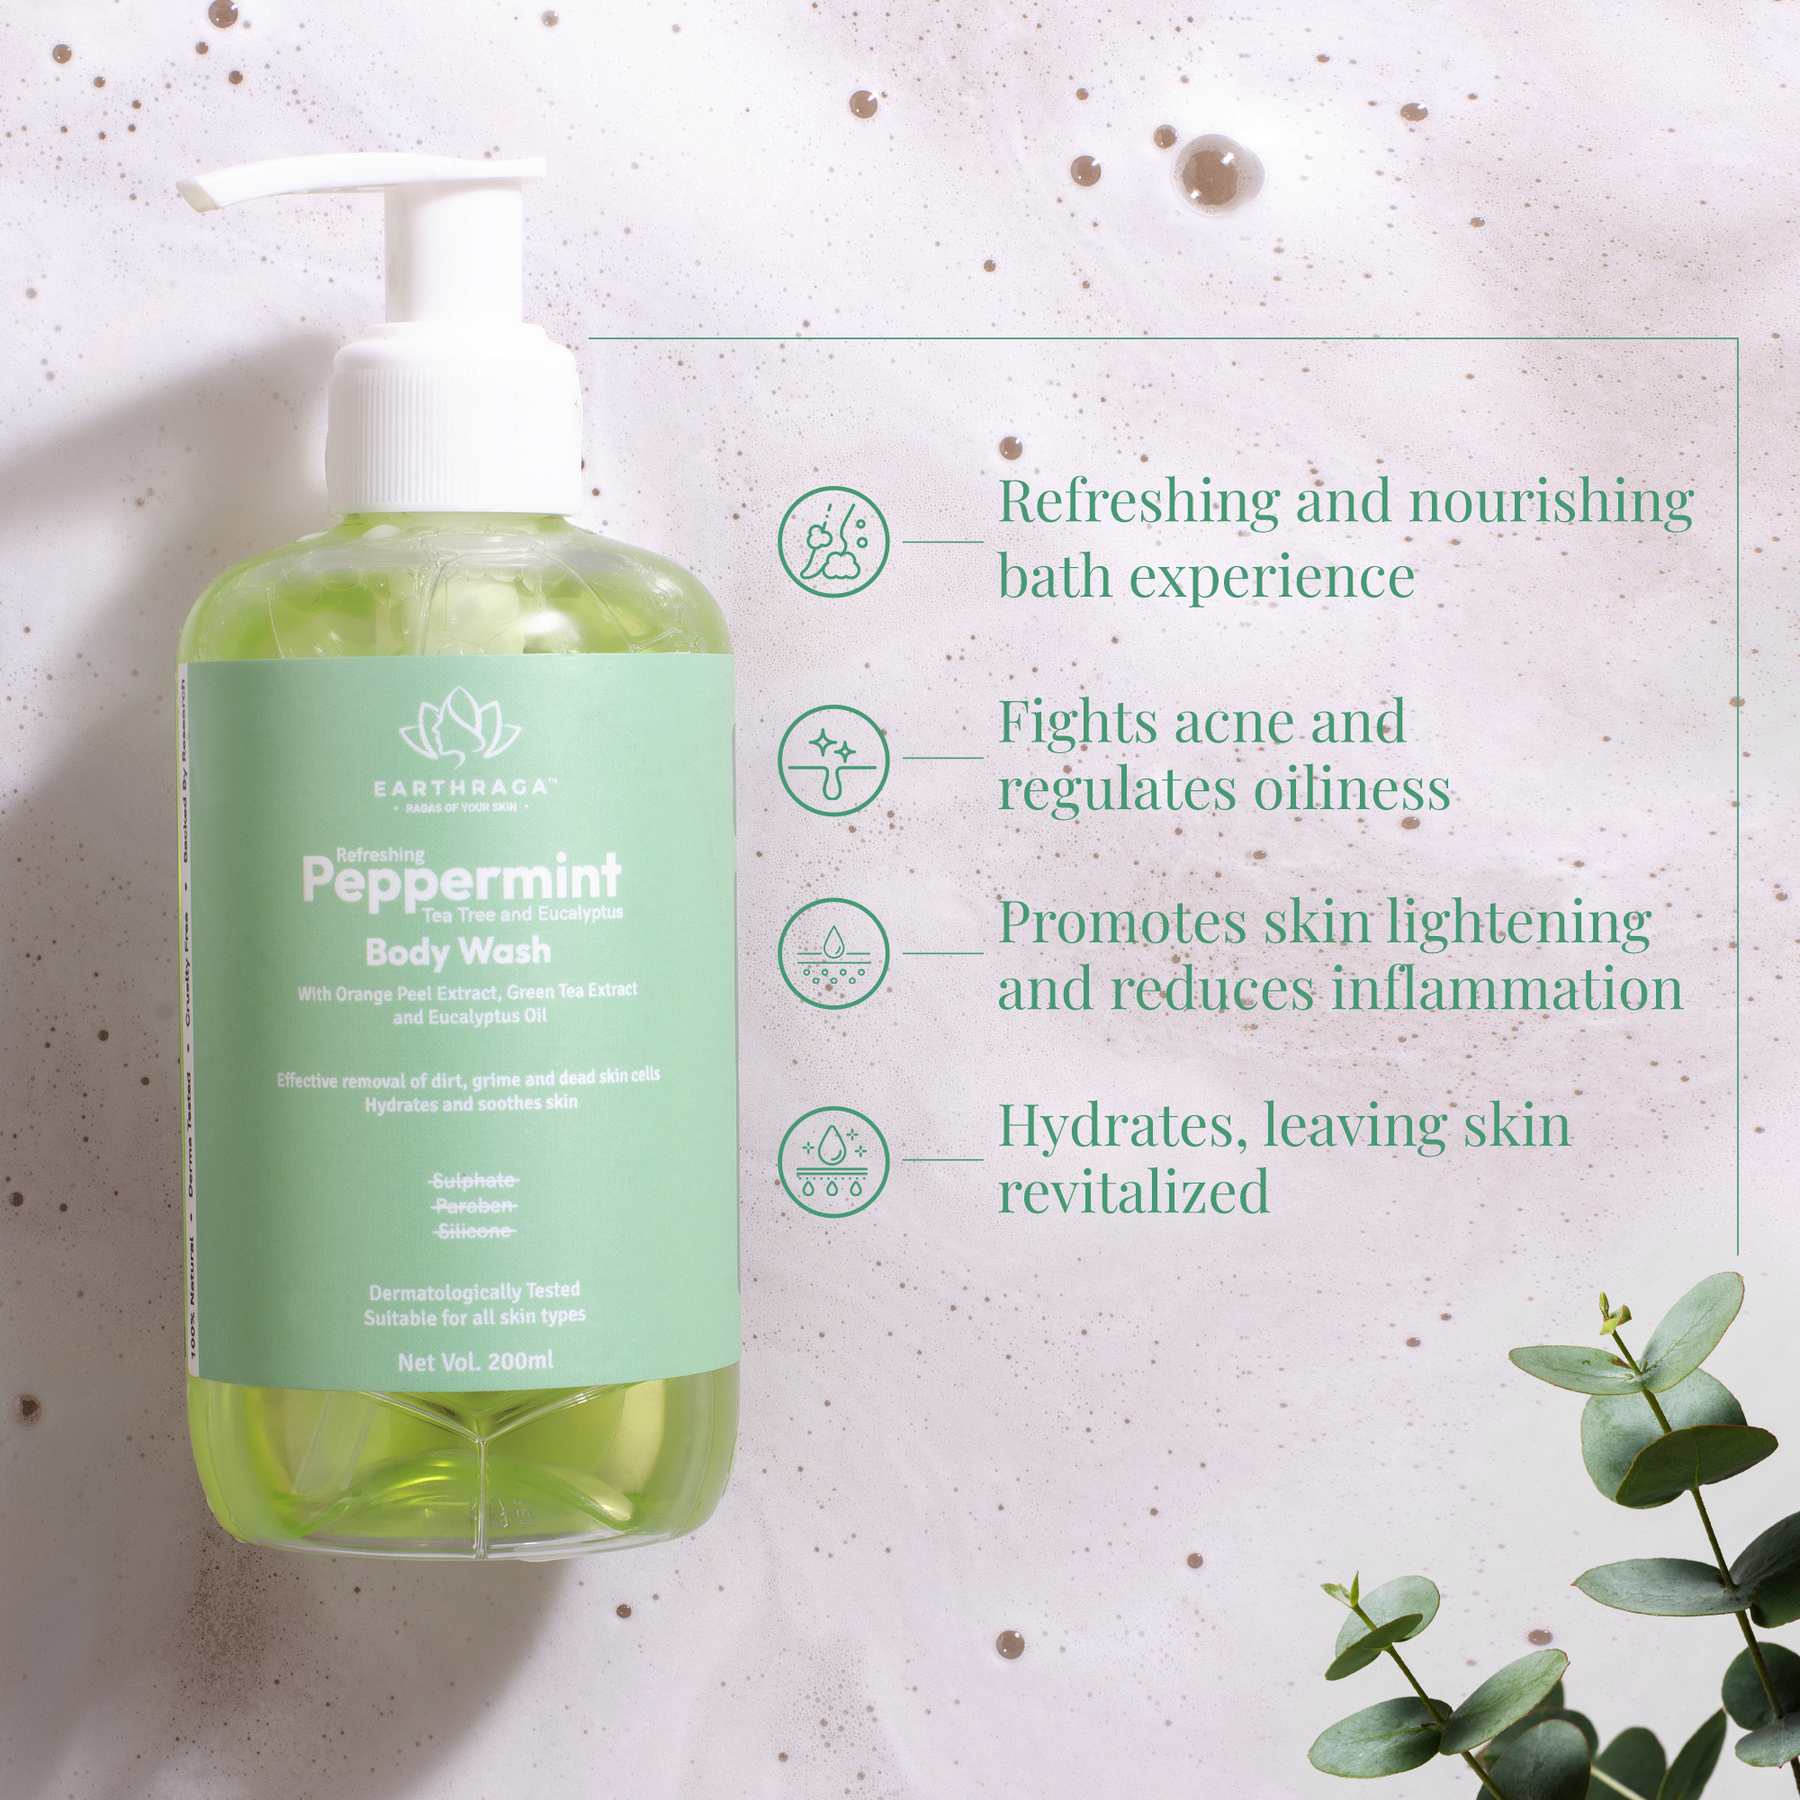 Peppermint, Tea Tree & Eucalyptus Body Wash | 200 ml